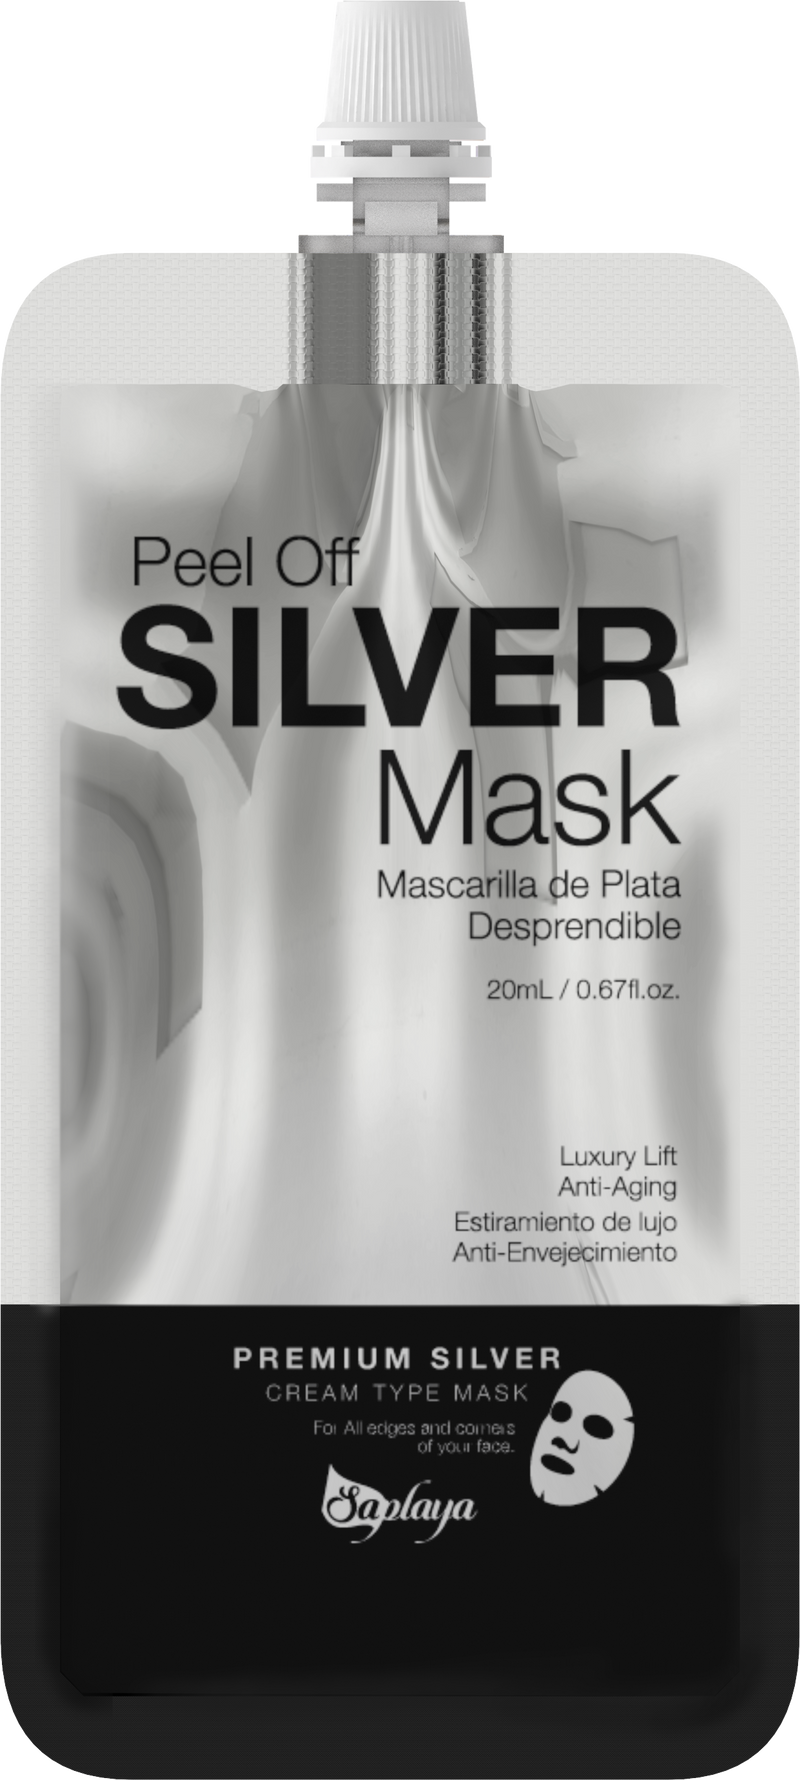 Peel Off Silver Mask